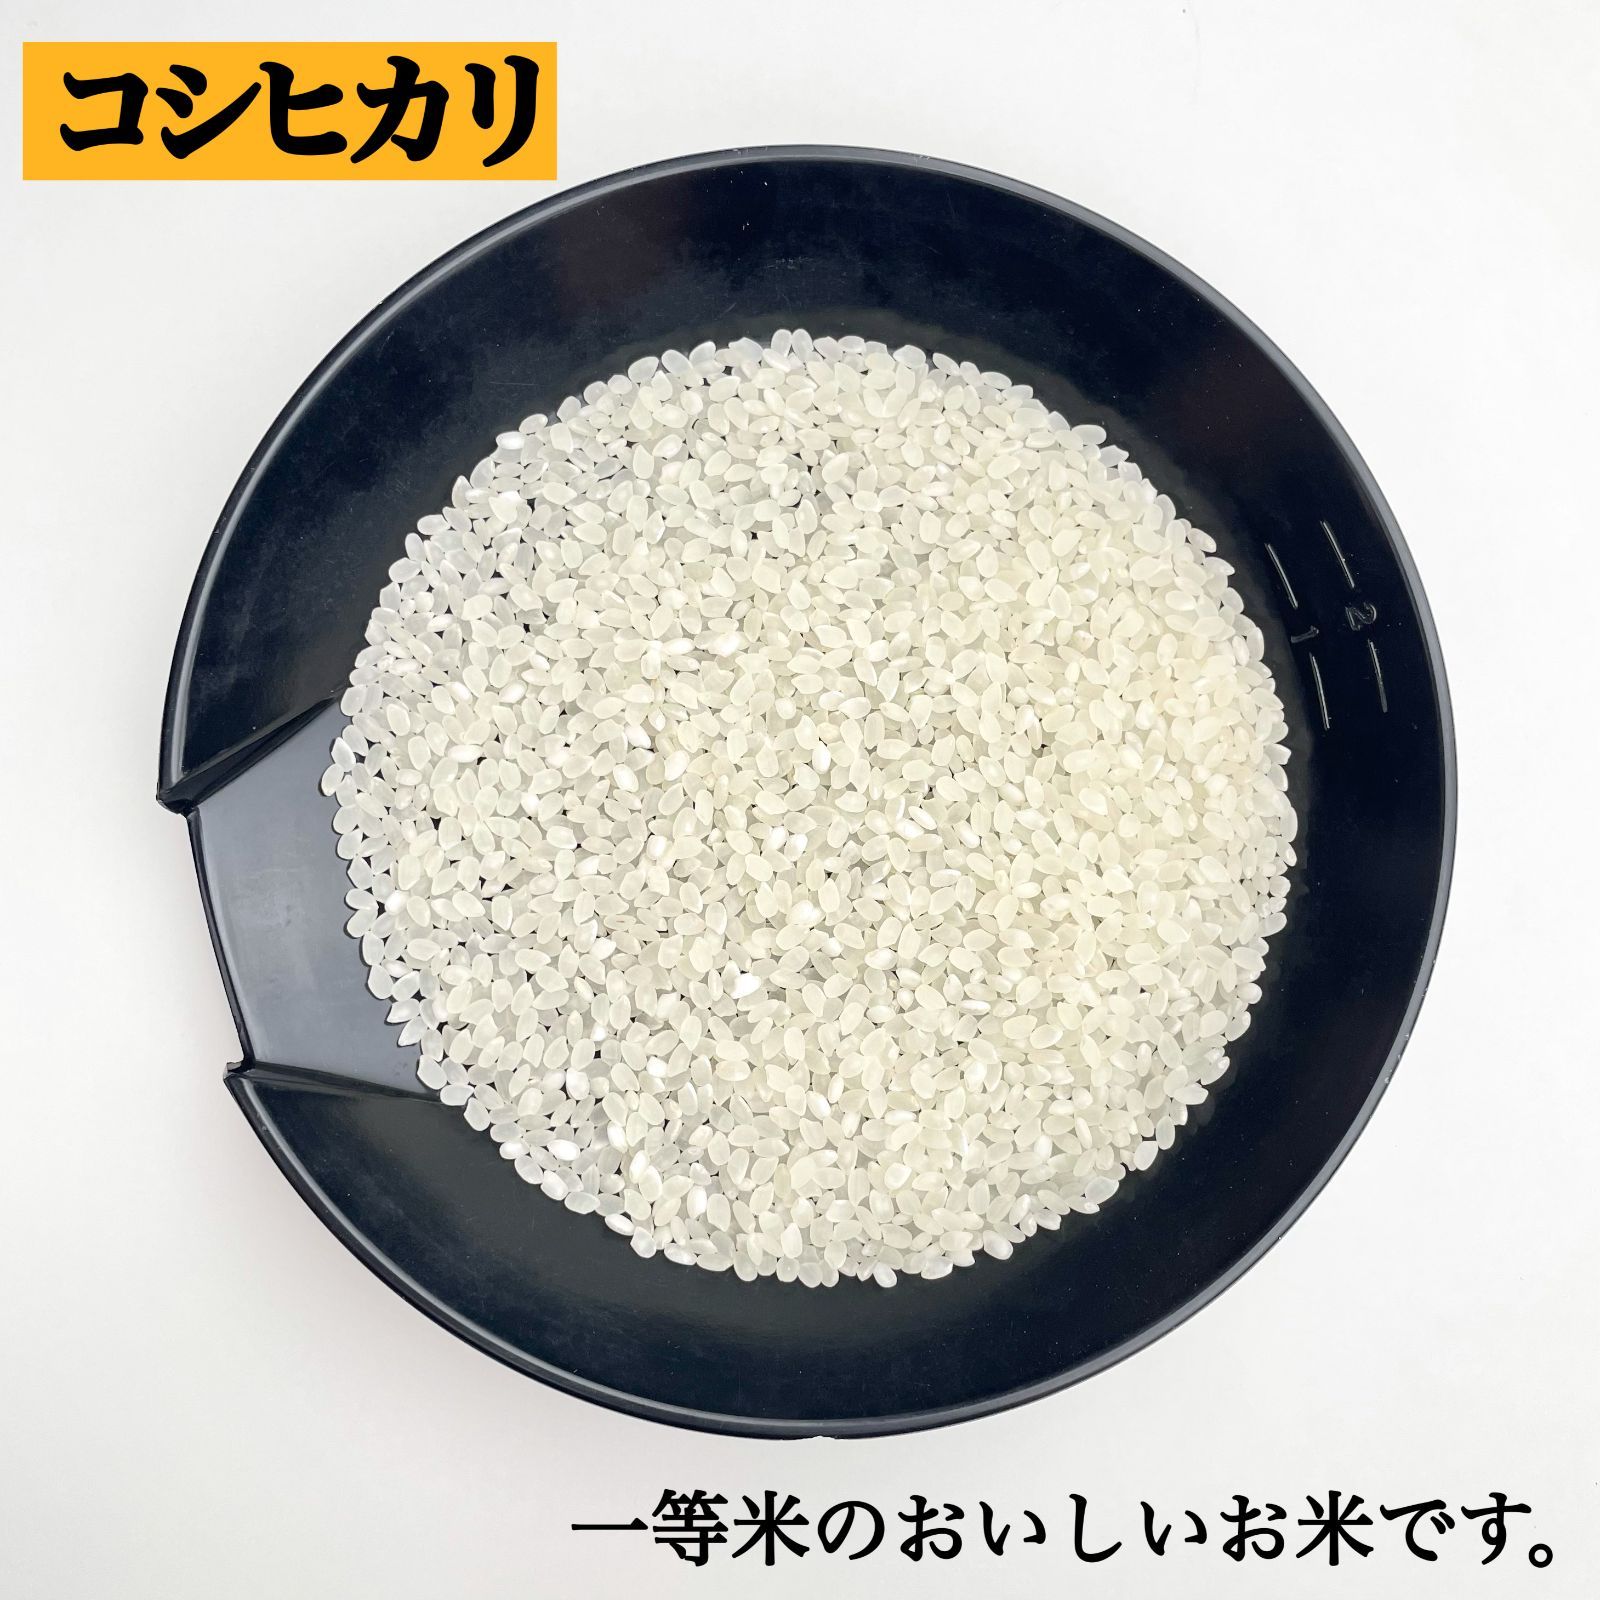 SALE／95%OFF】 美味しいお米 令和4年 埼玉県産 コシヒカリ 白米 5kg 送料無料